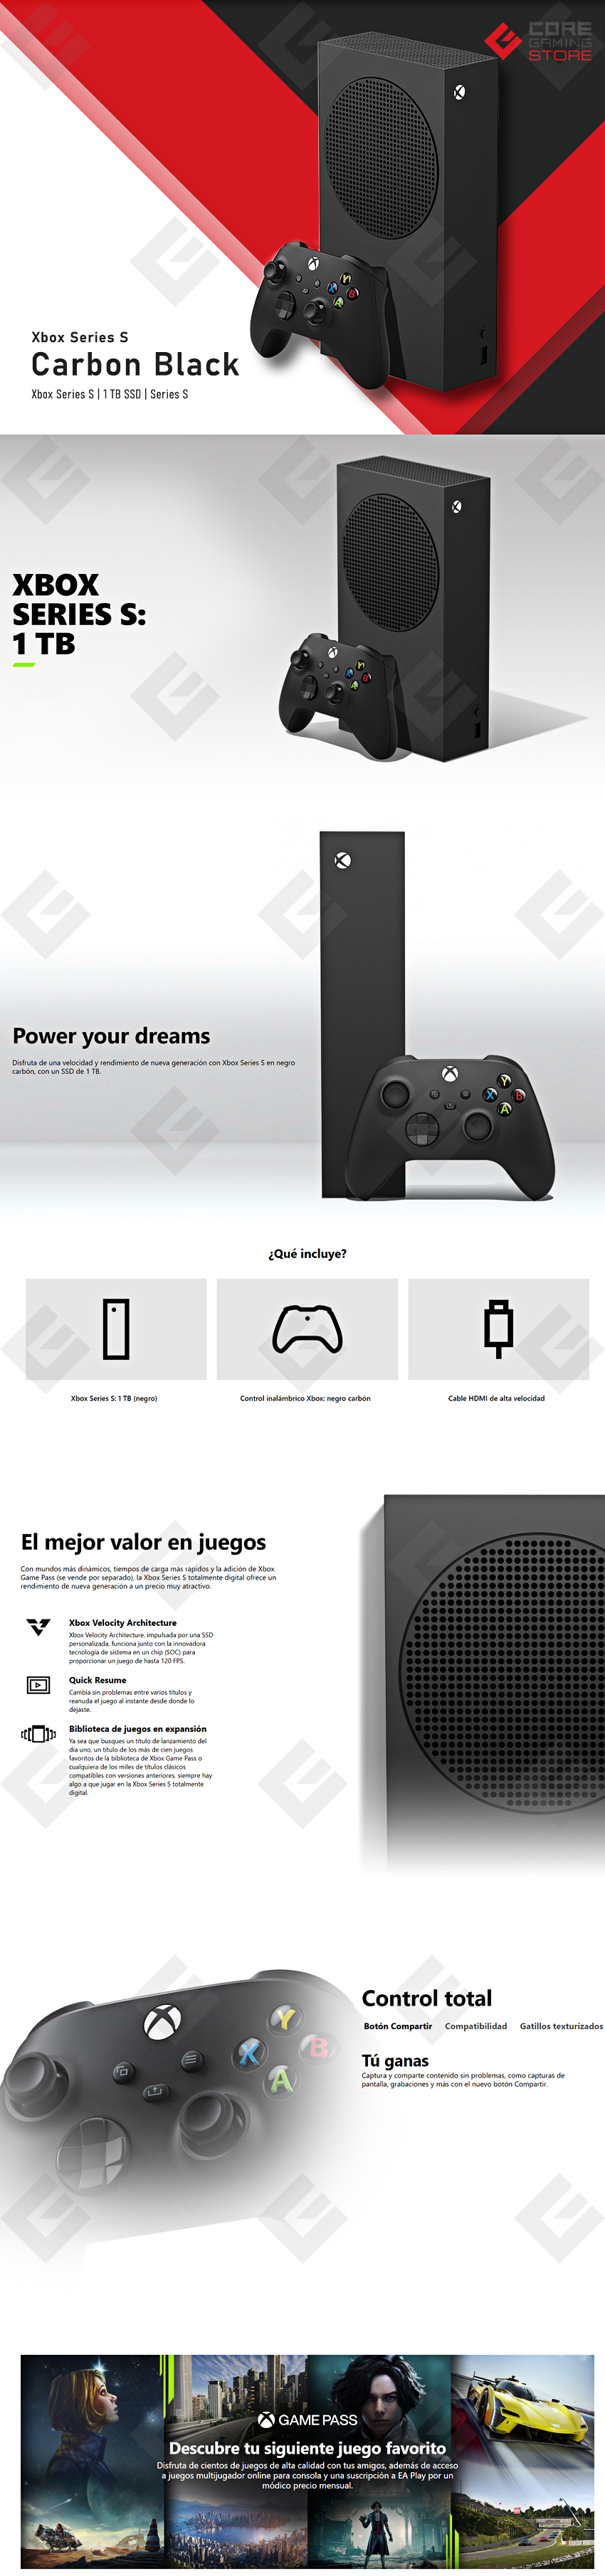 Consola Xbox Series S, 1TB, Carbon Black